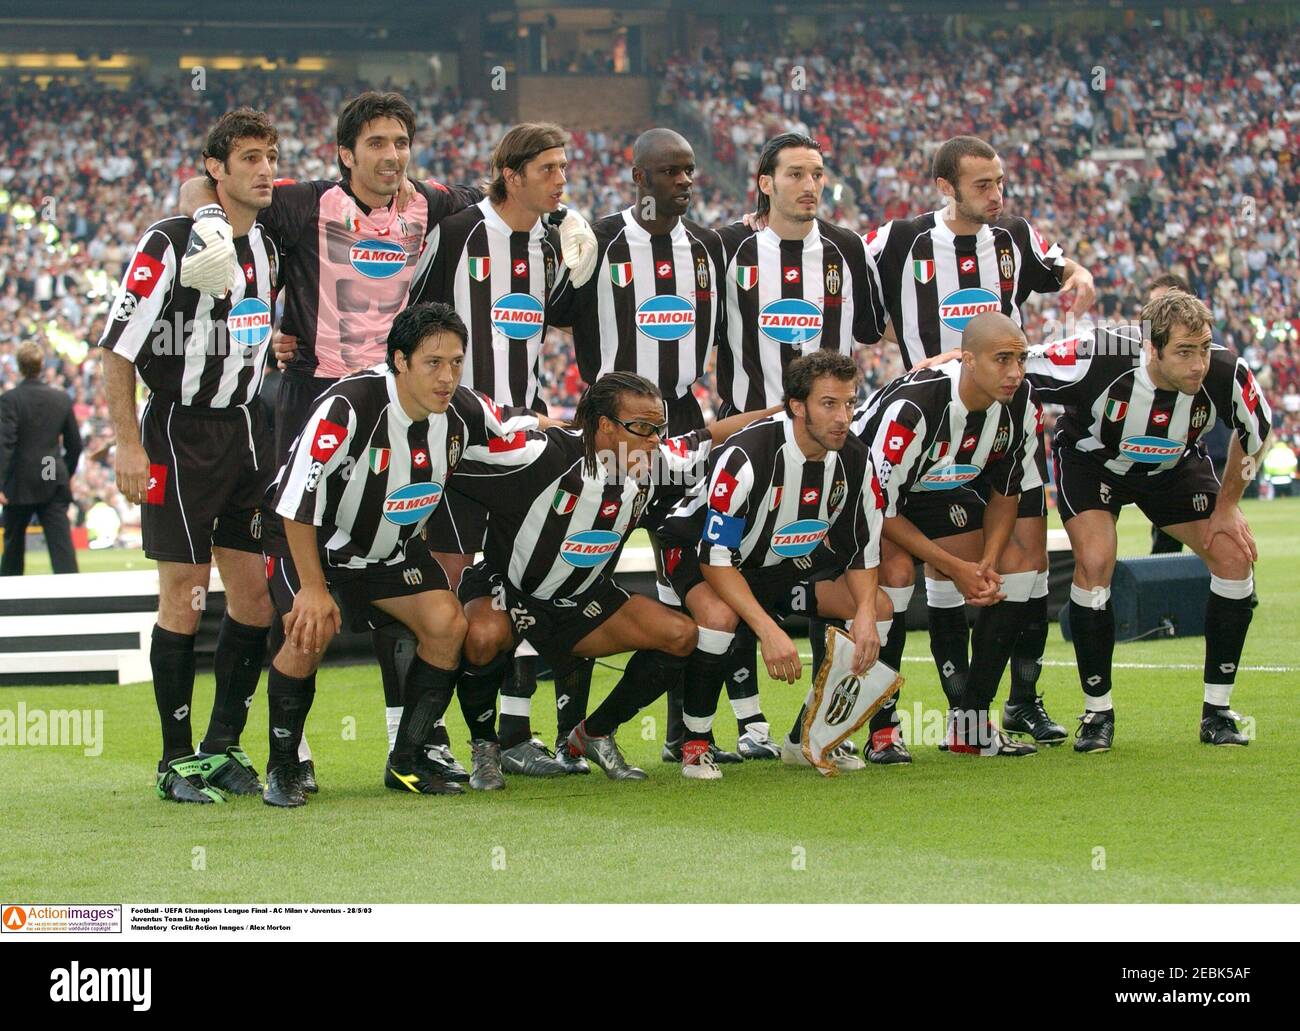 Football - UEFA Champions League Final - AC Milan v Juventus - 28/5/03  Juventus Team Line up Mandatory Credit: Action Images / Alex Morton Stock  Photo - Alamy